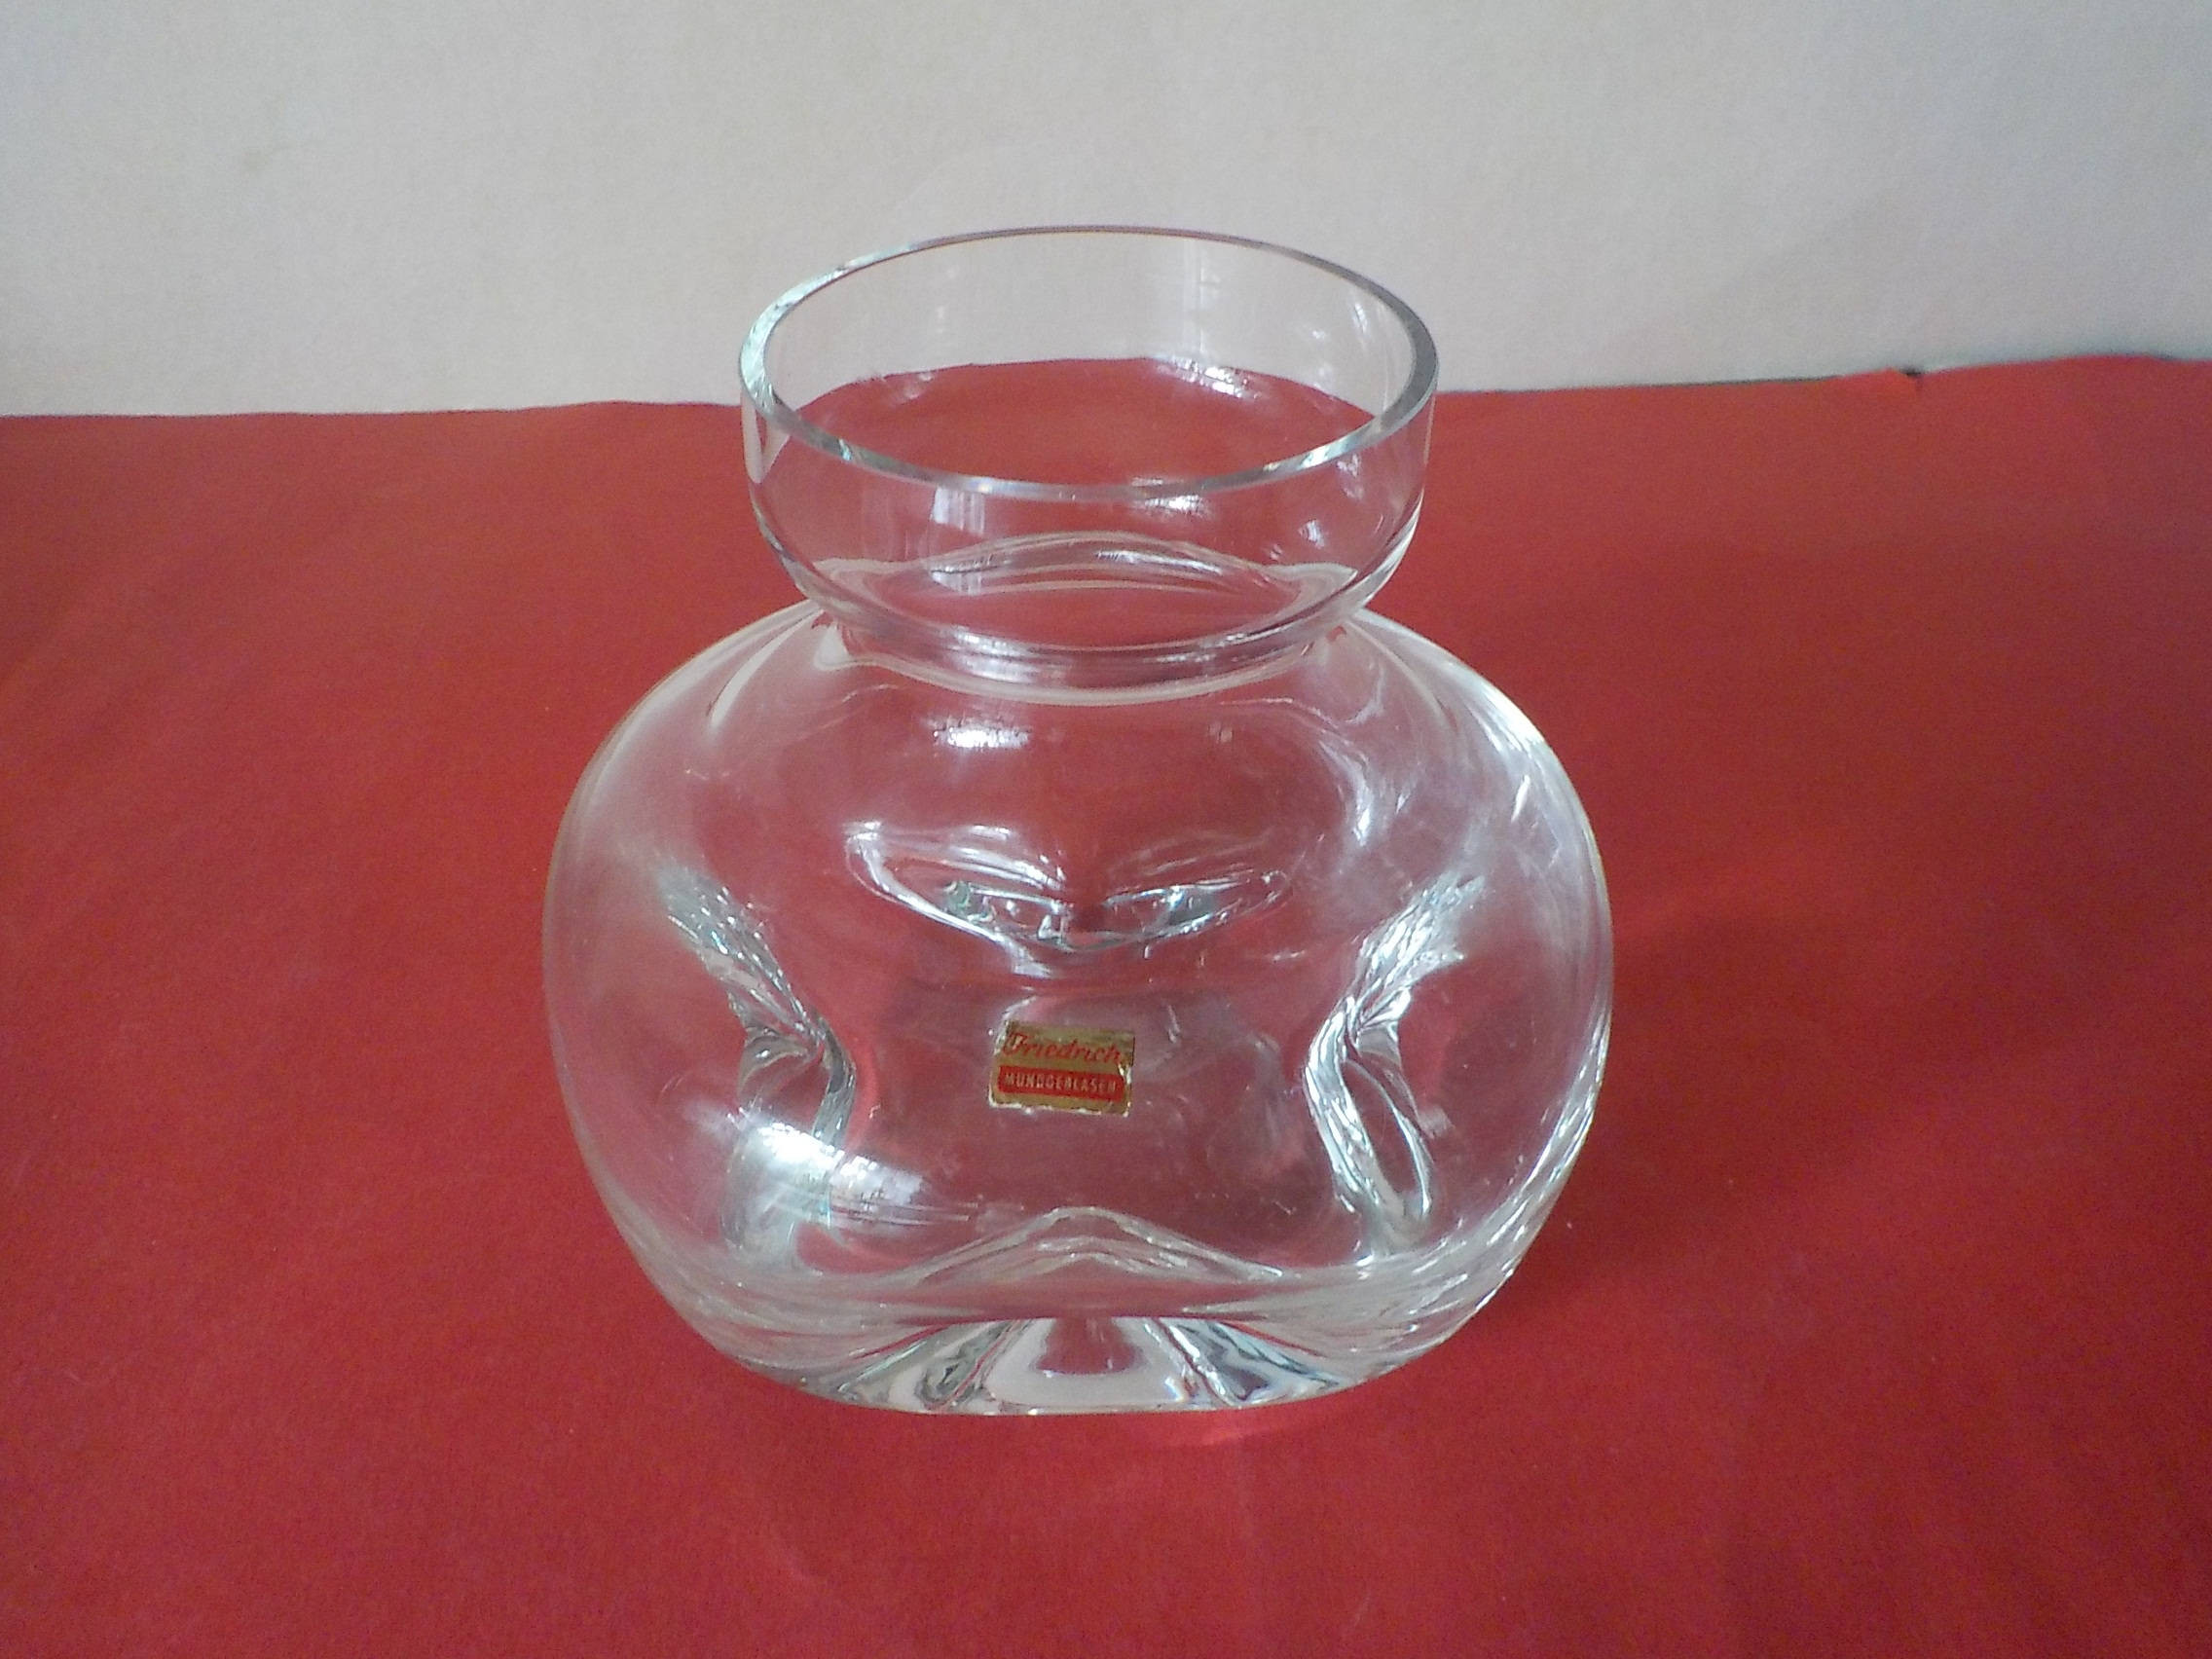 21 Stylish Small Crystal Flower Vase 2024 free download small crystal flower vase of small friedrich glas vase glass vase hyacinth vase clear mouth etsy intended for dc29fc294c28ezoom